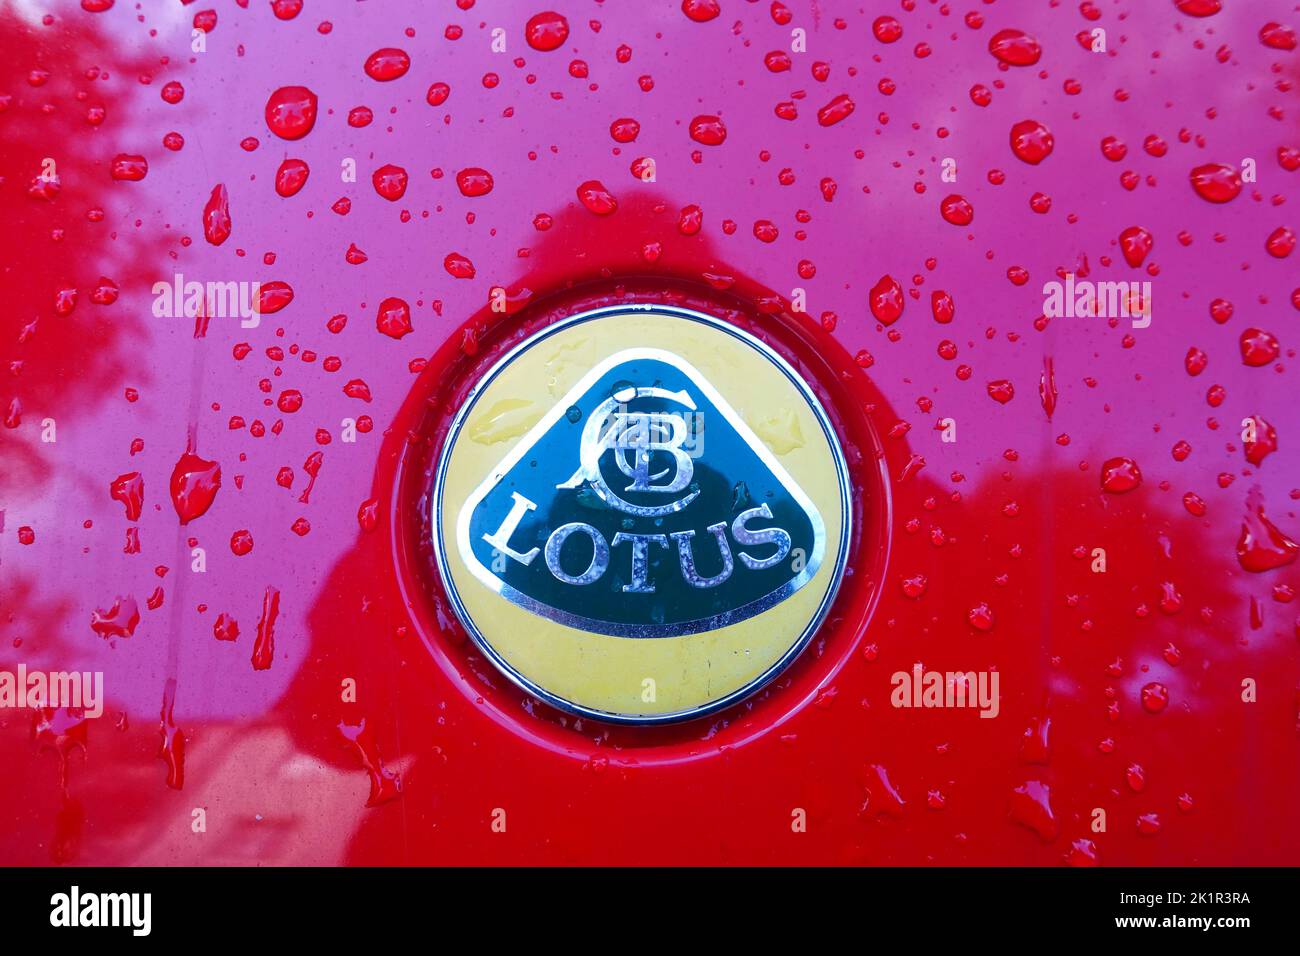 Lotus vehicle Stock Photo